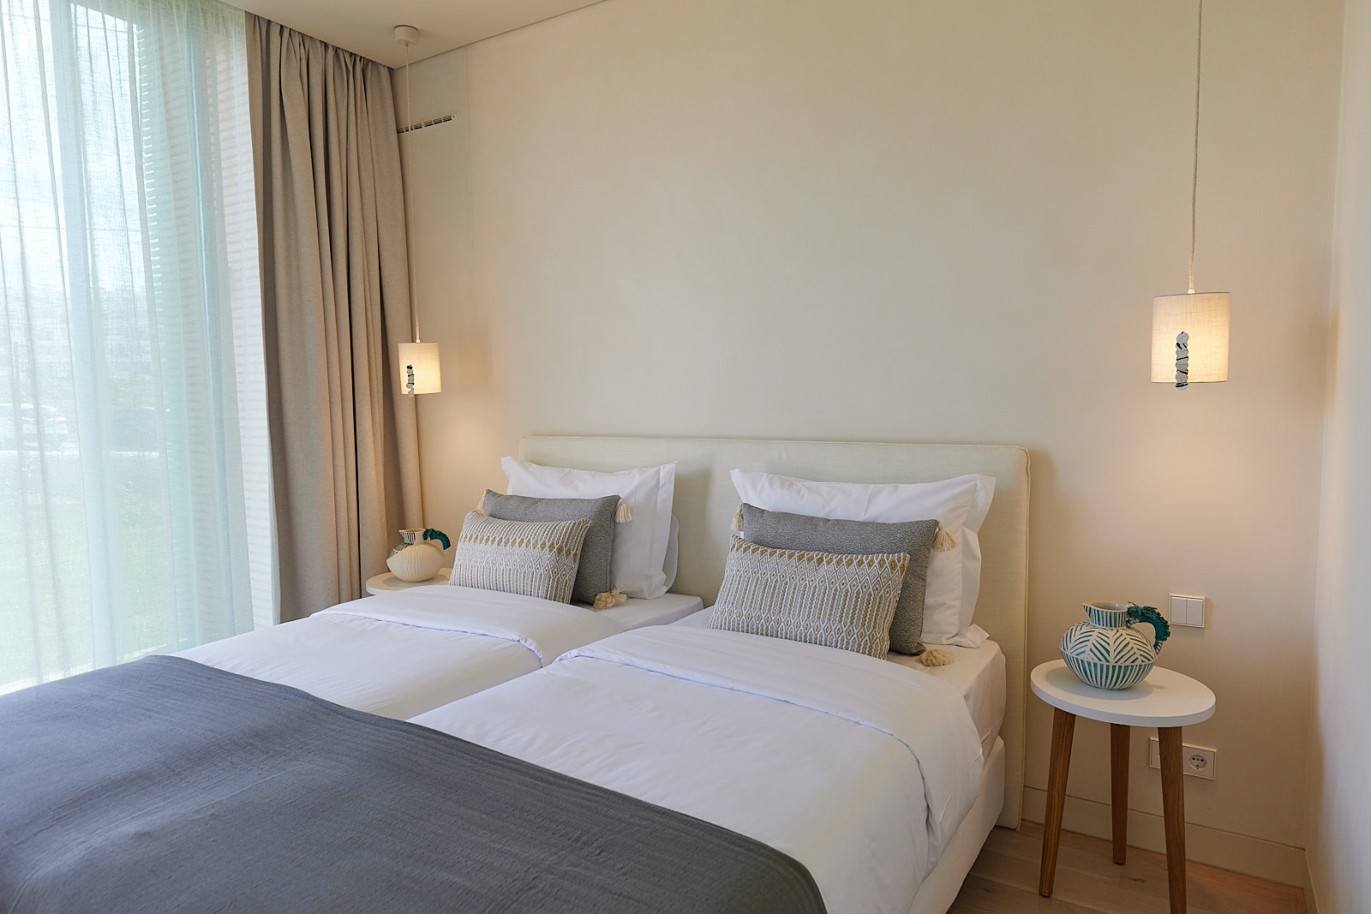 2 bedroom apartment in resort, for sale in Porches, Algarve_230569